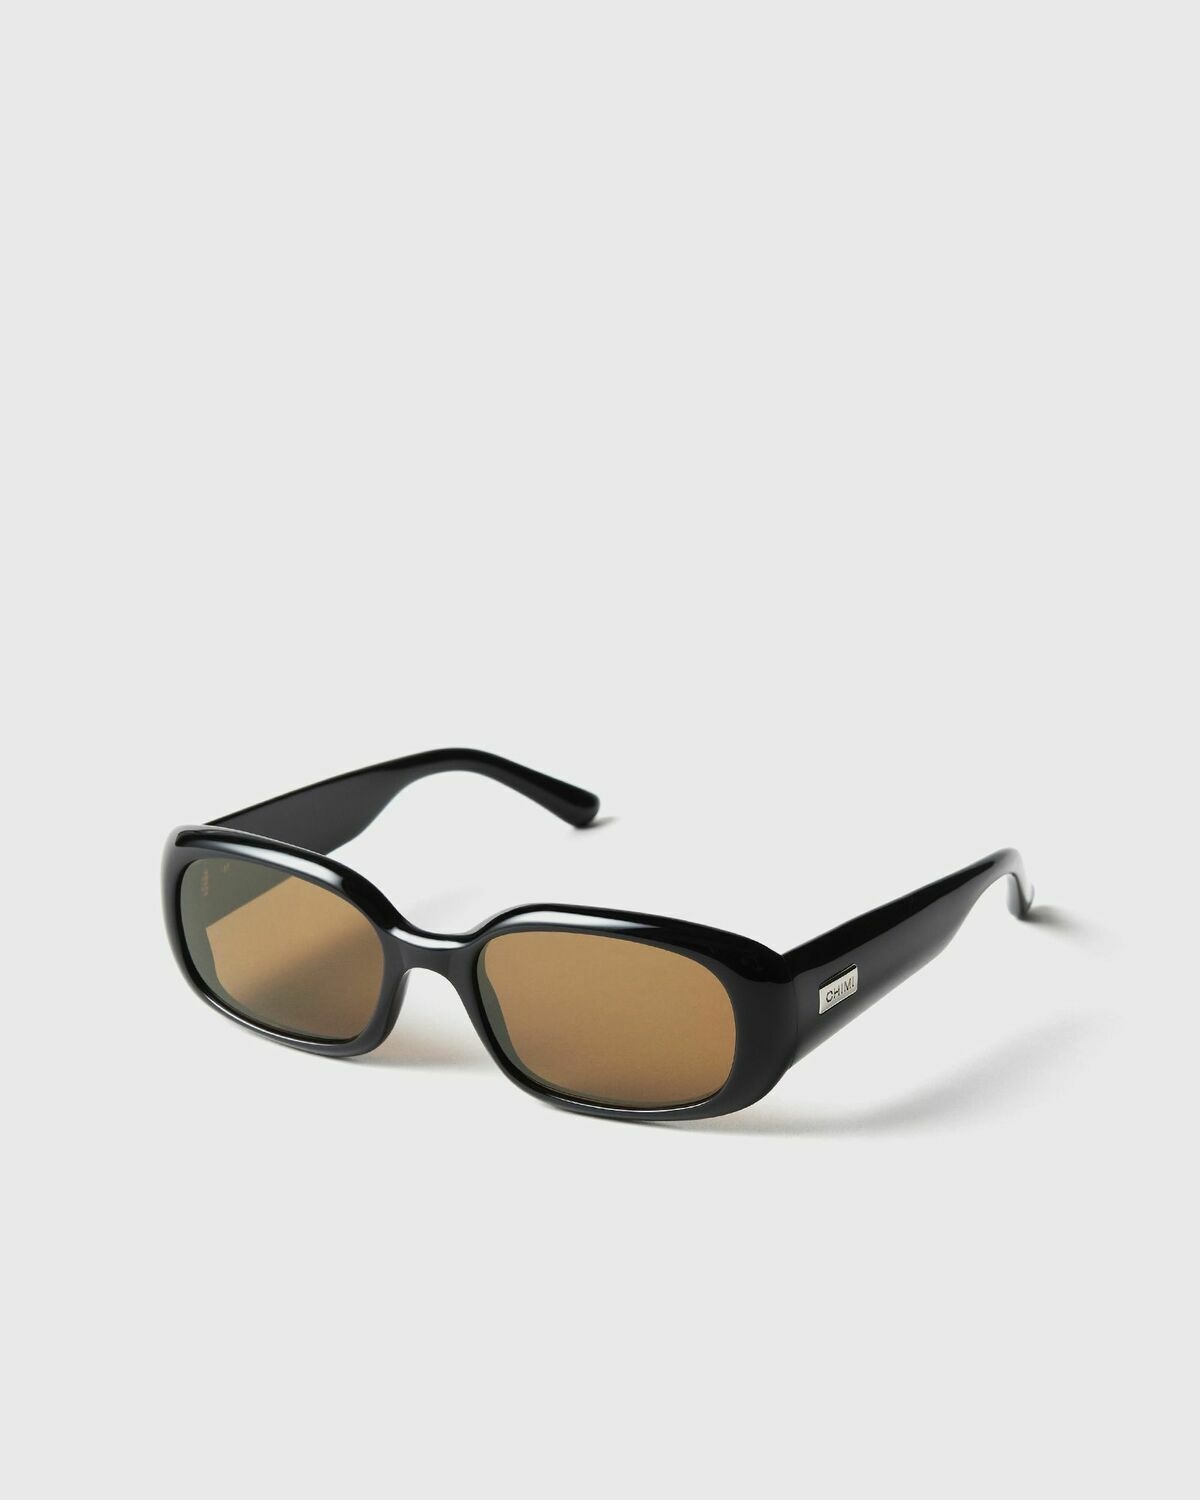 Chimi Eyewear Lax Black Sunglasses Black - Mens - Eyewear